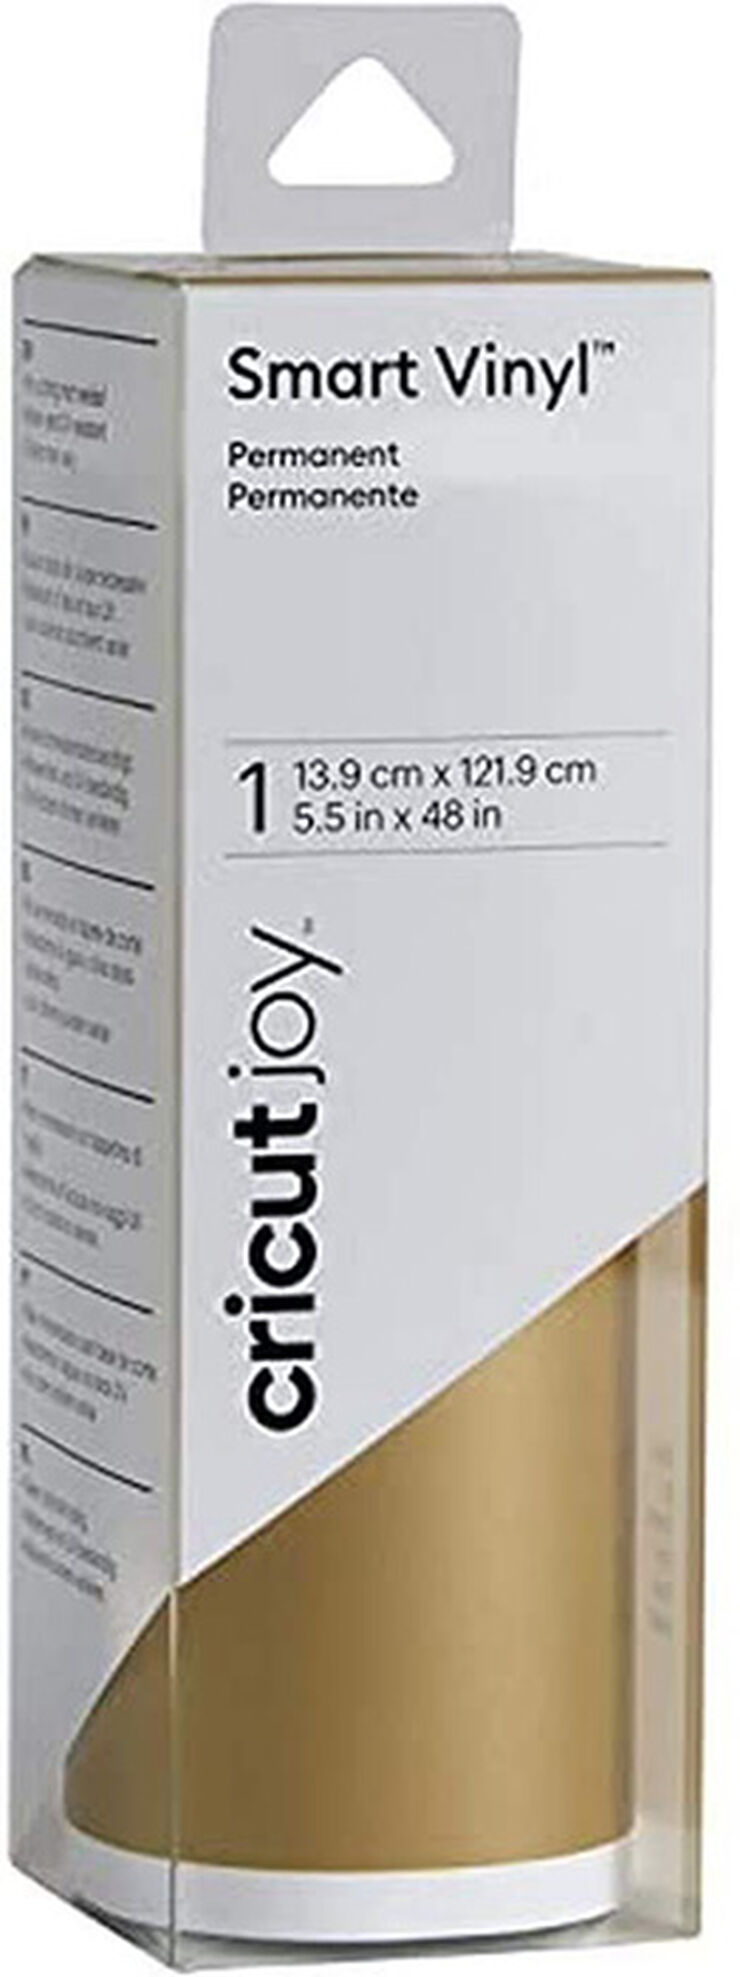 Cricut Vinil Smart permanent 33x366 or